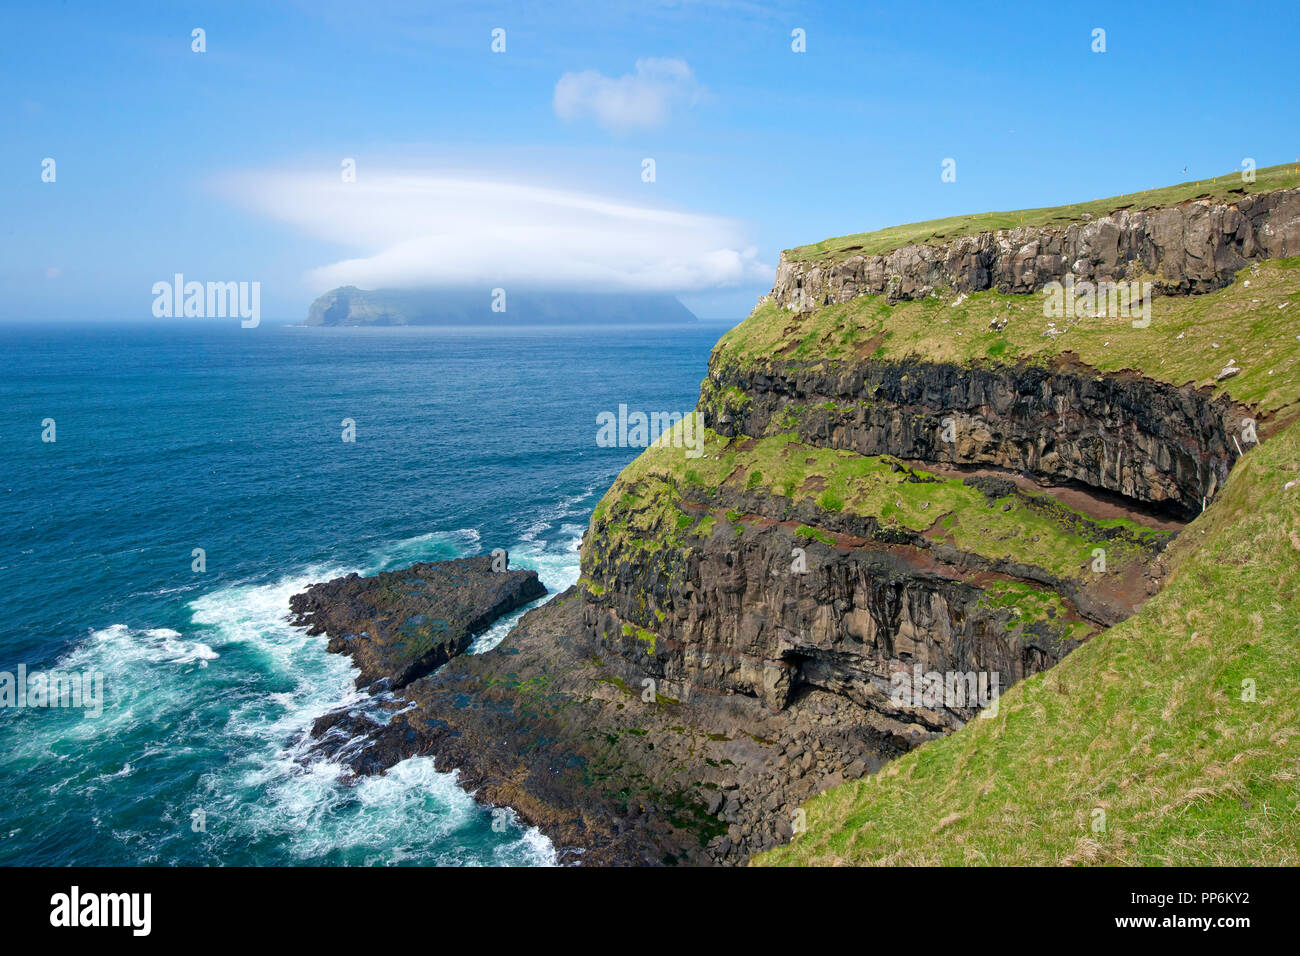 Gasadalur cliff, giornata soleggiata, funzionario ministeriale, Isole Faerøer, Danimarca. Foto Stock